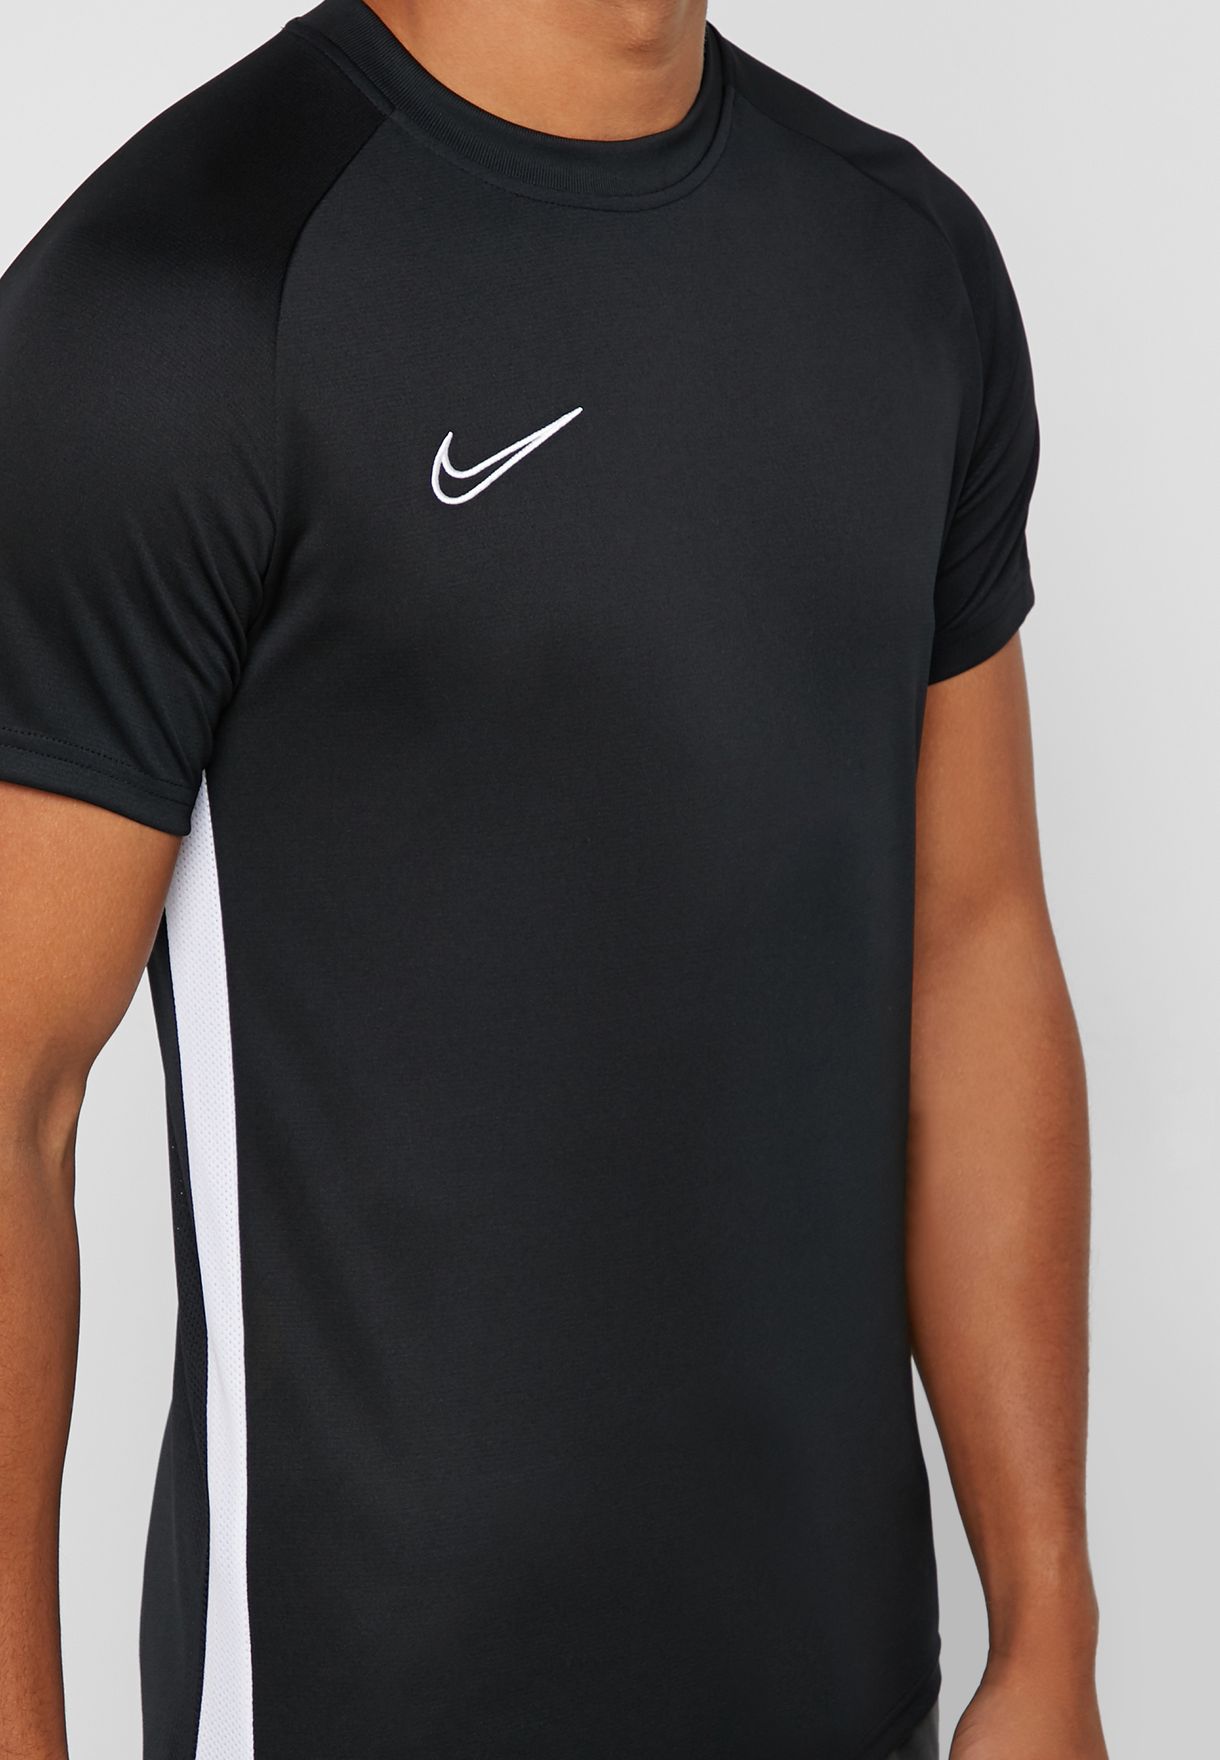 Nike Dri-FIT T-Shirt for Men in MENA, Worldwide